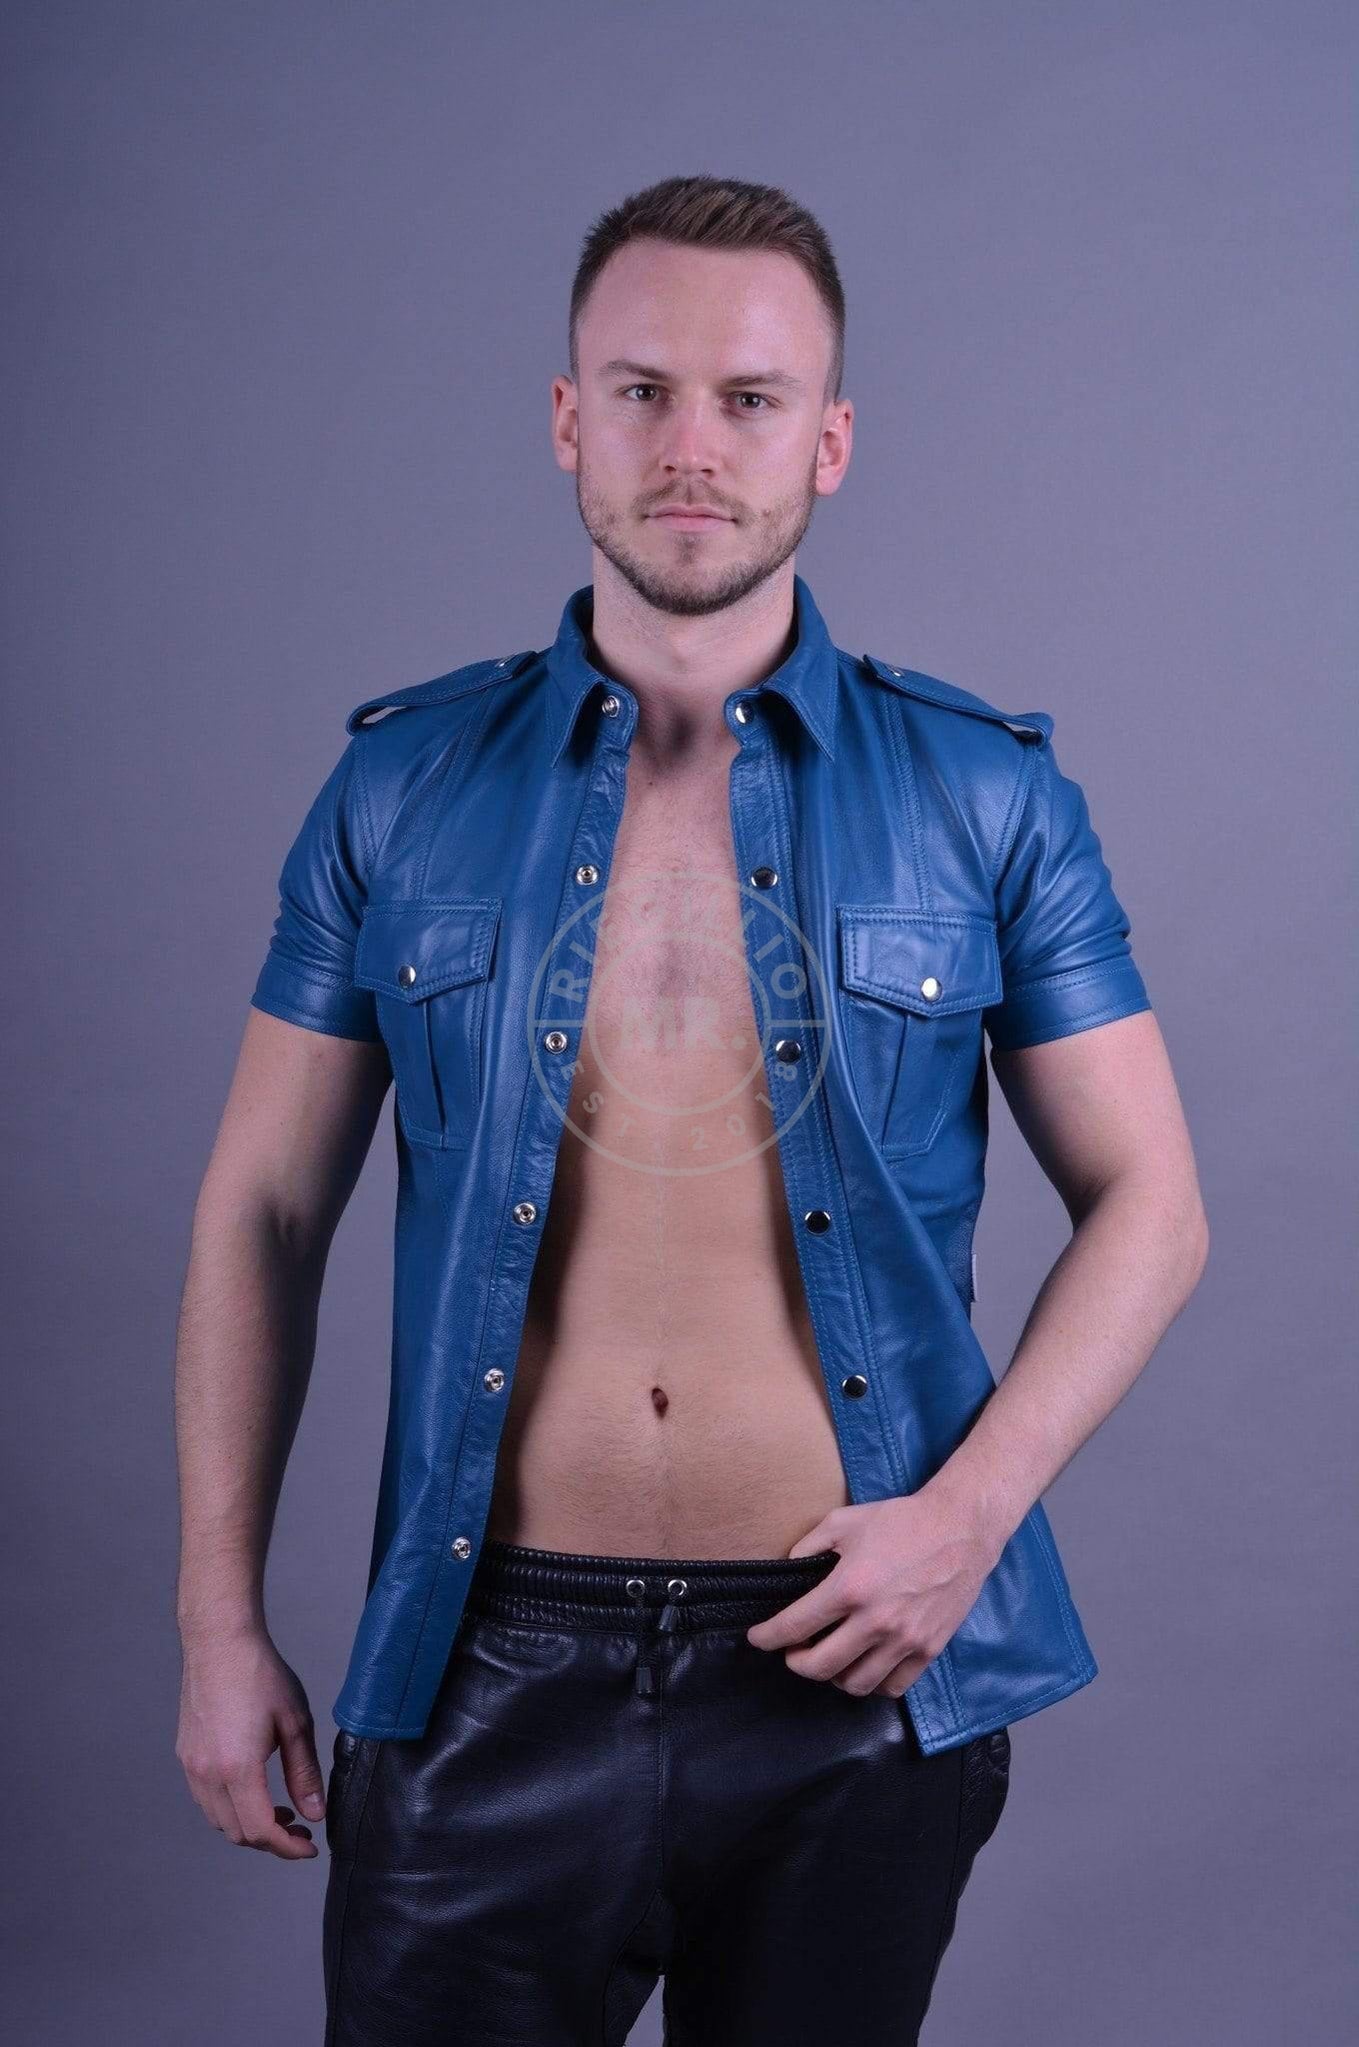 Jeans Blue Leather Shirt at MR. Riegillio